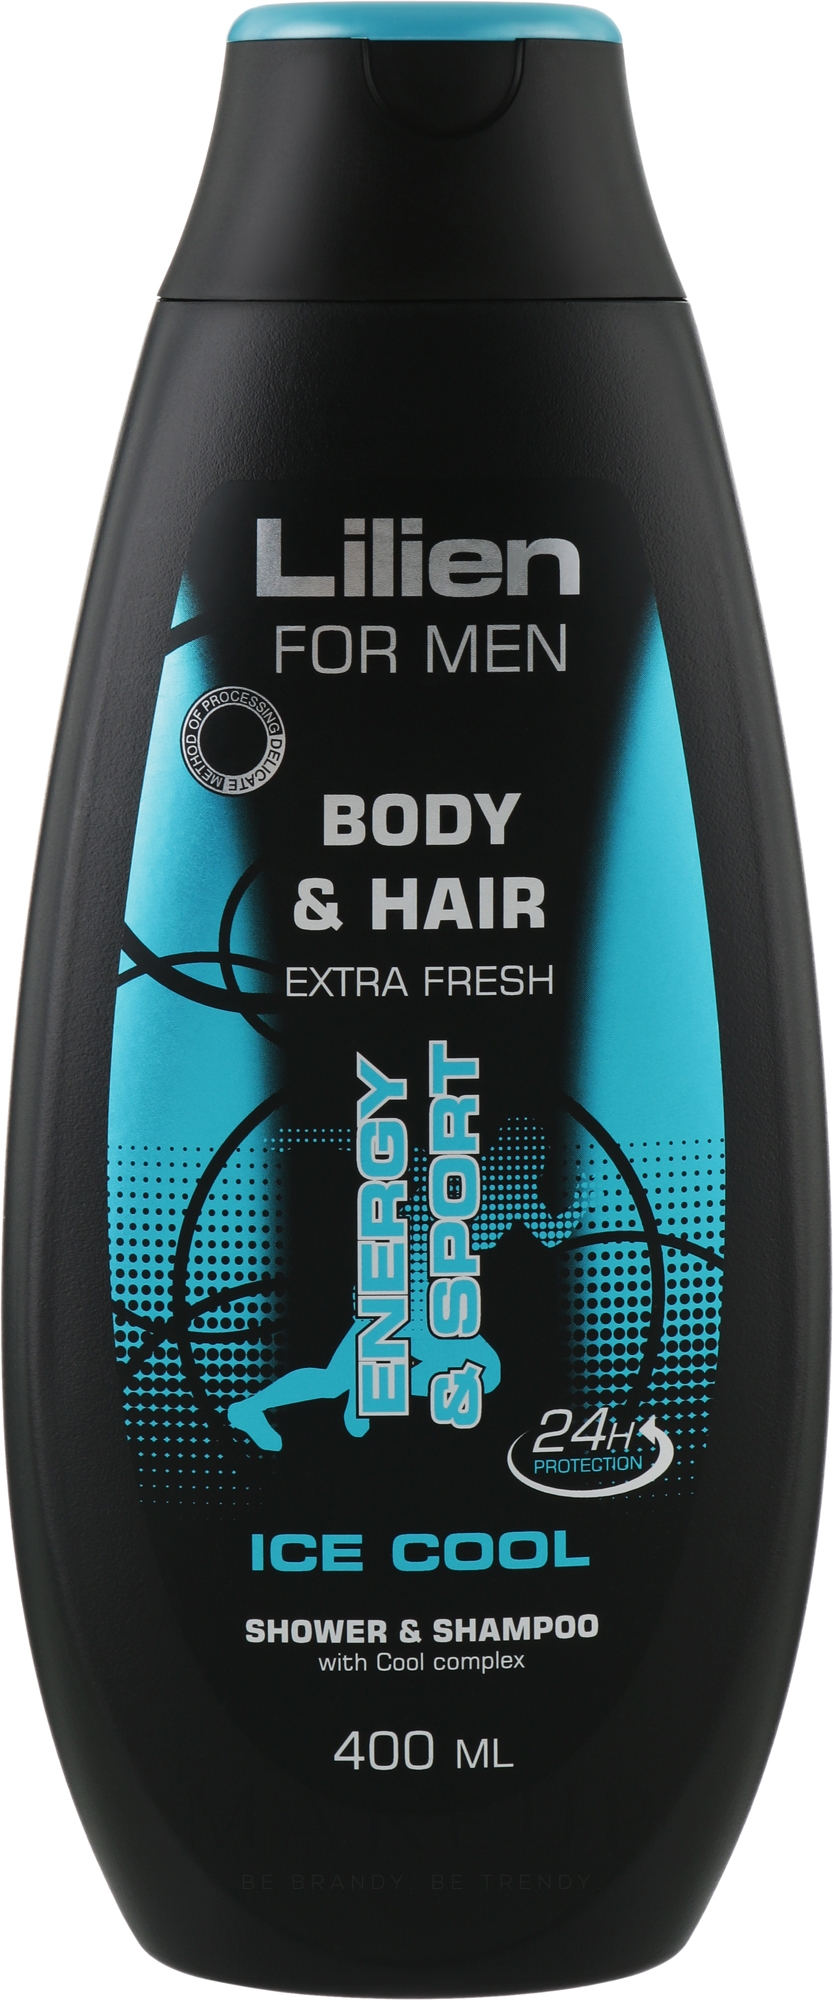 2in1 Shampoo und Duschgel Ice Cool - Lilien For Men Body & Hair Shower & Shampoo — Foto 400 ml